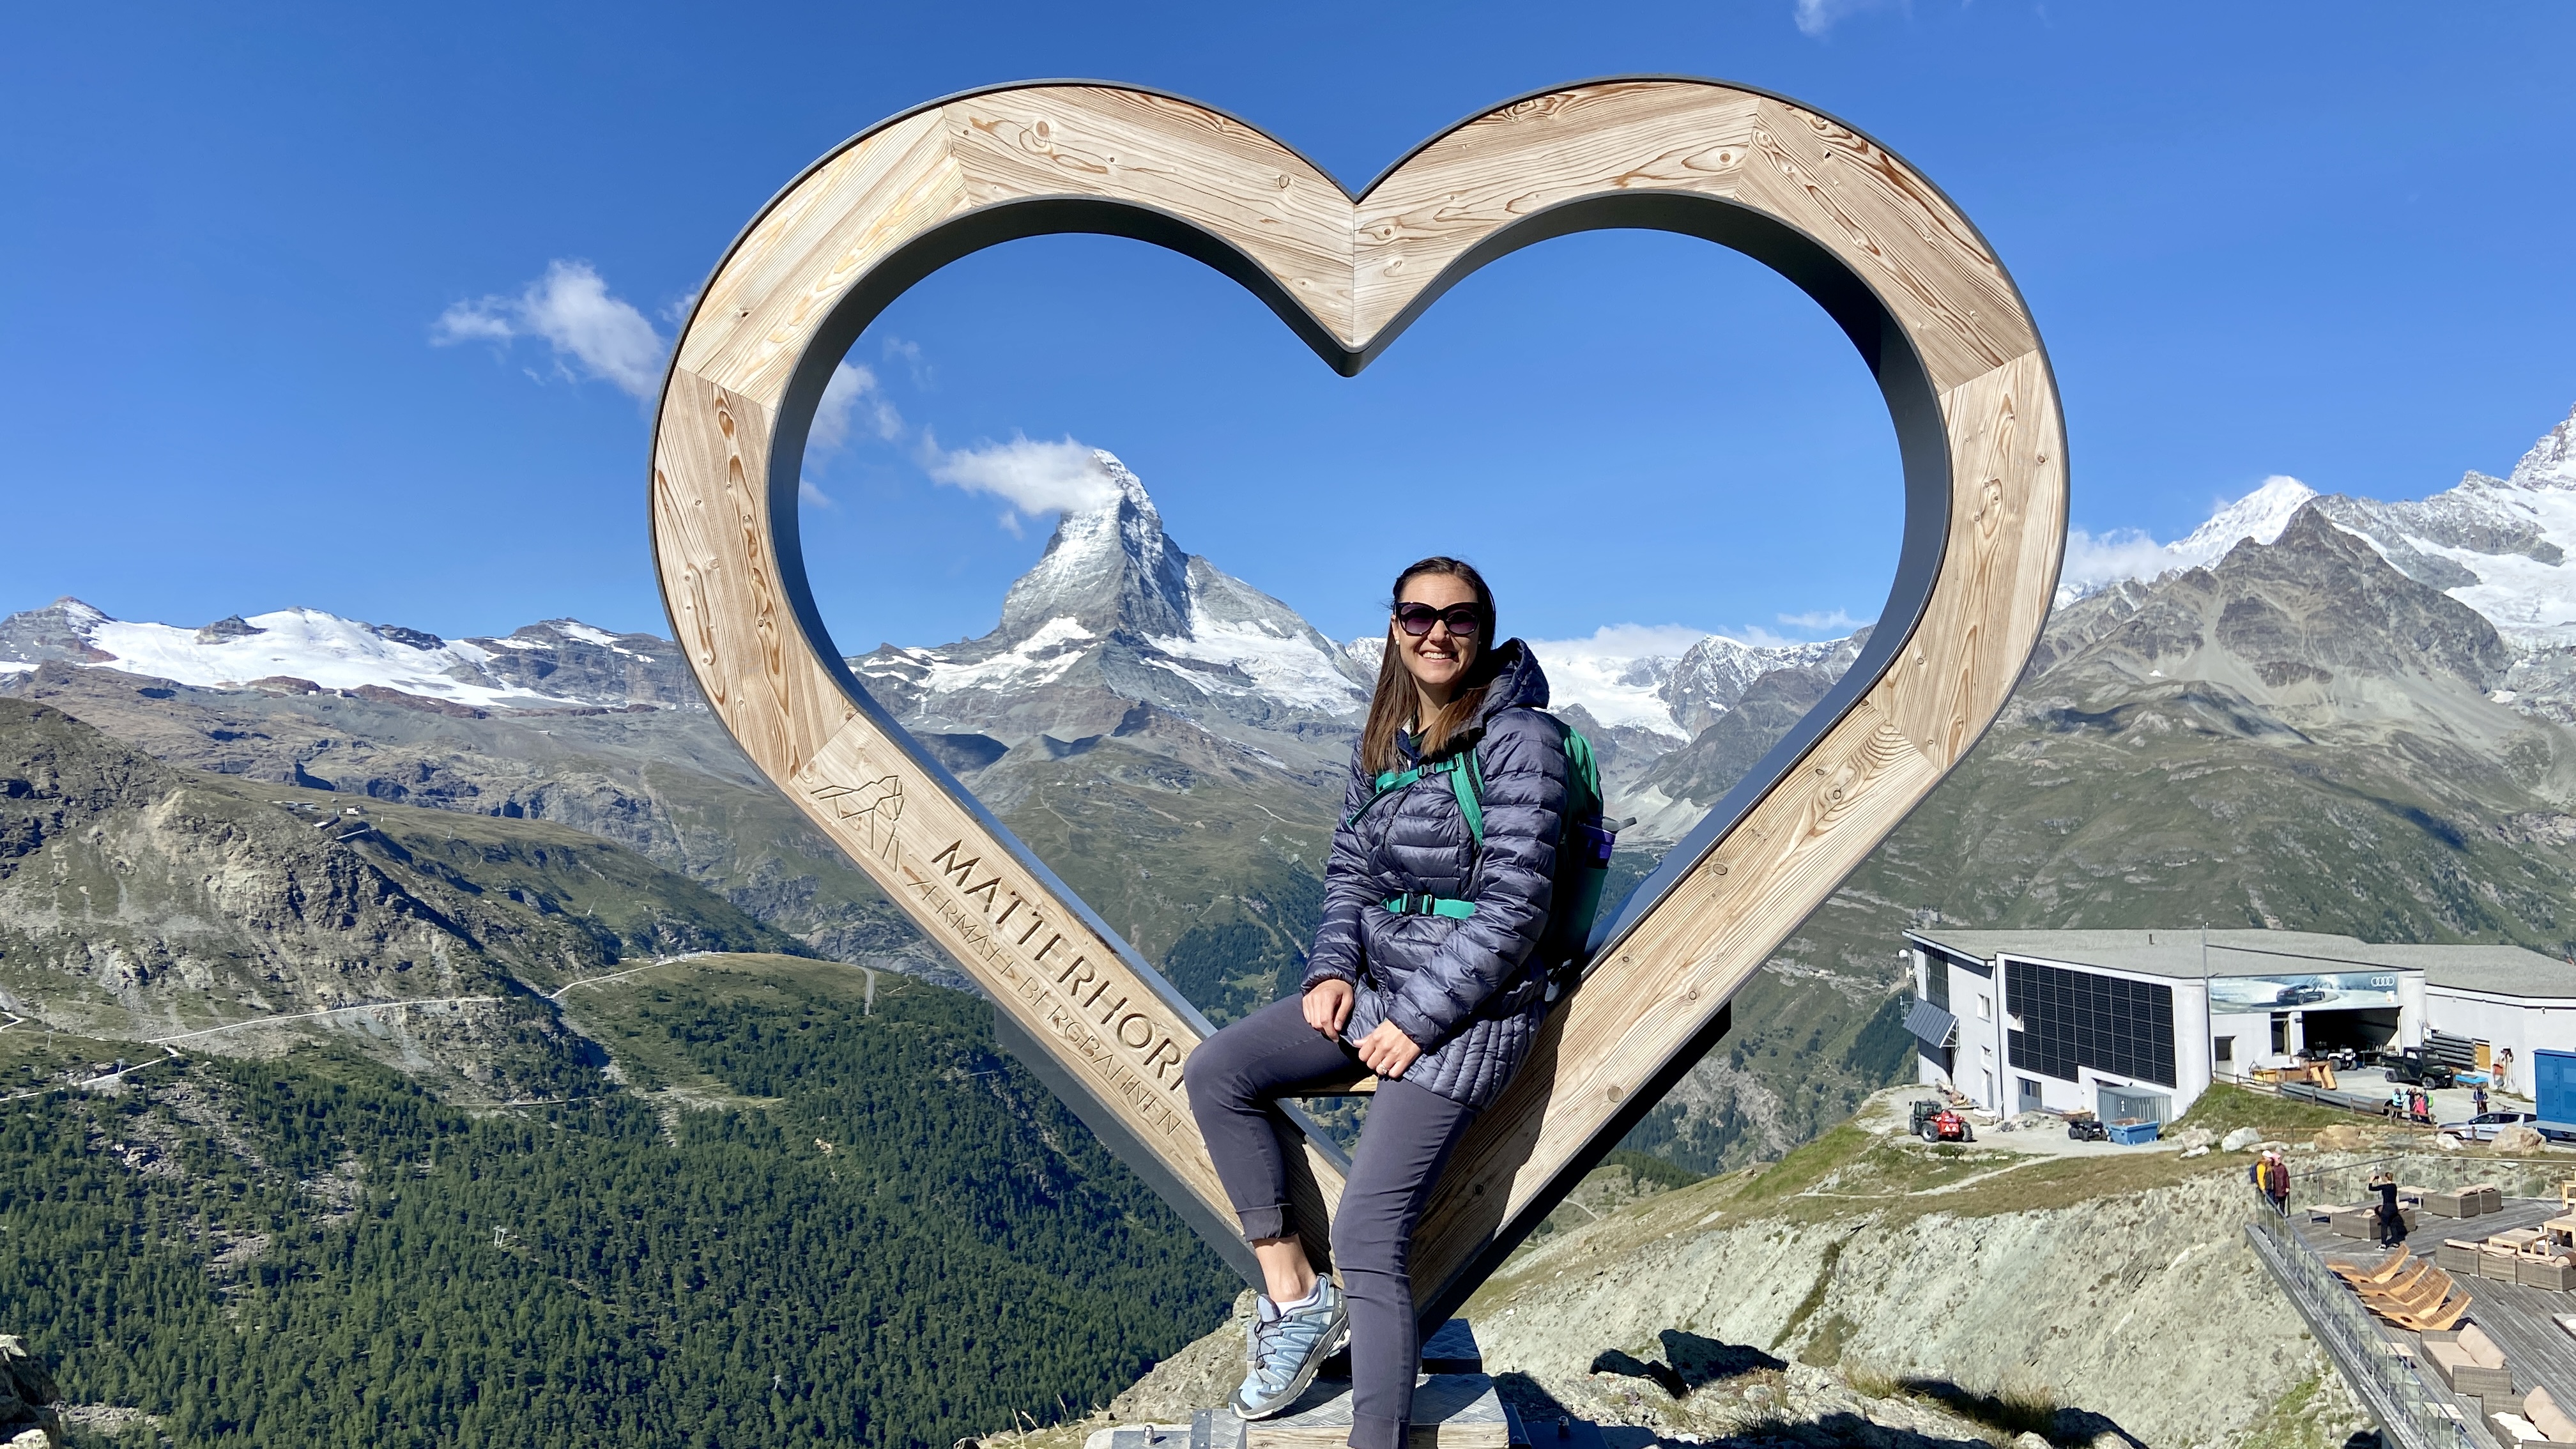 Jana in front of the matterhorn mountain from the 5 lakes hike in zermatt